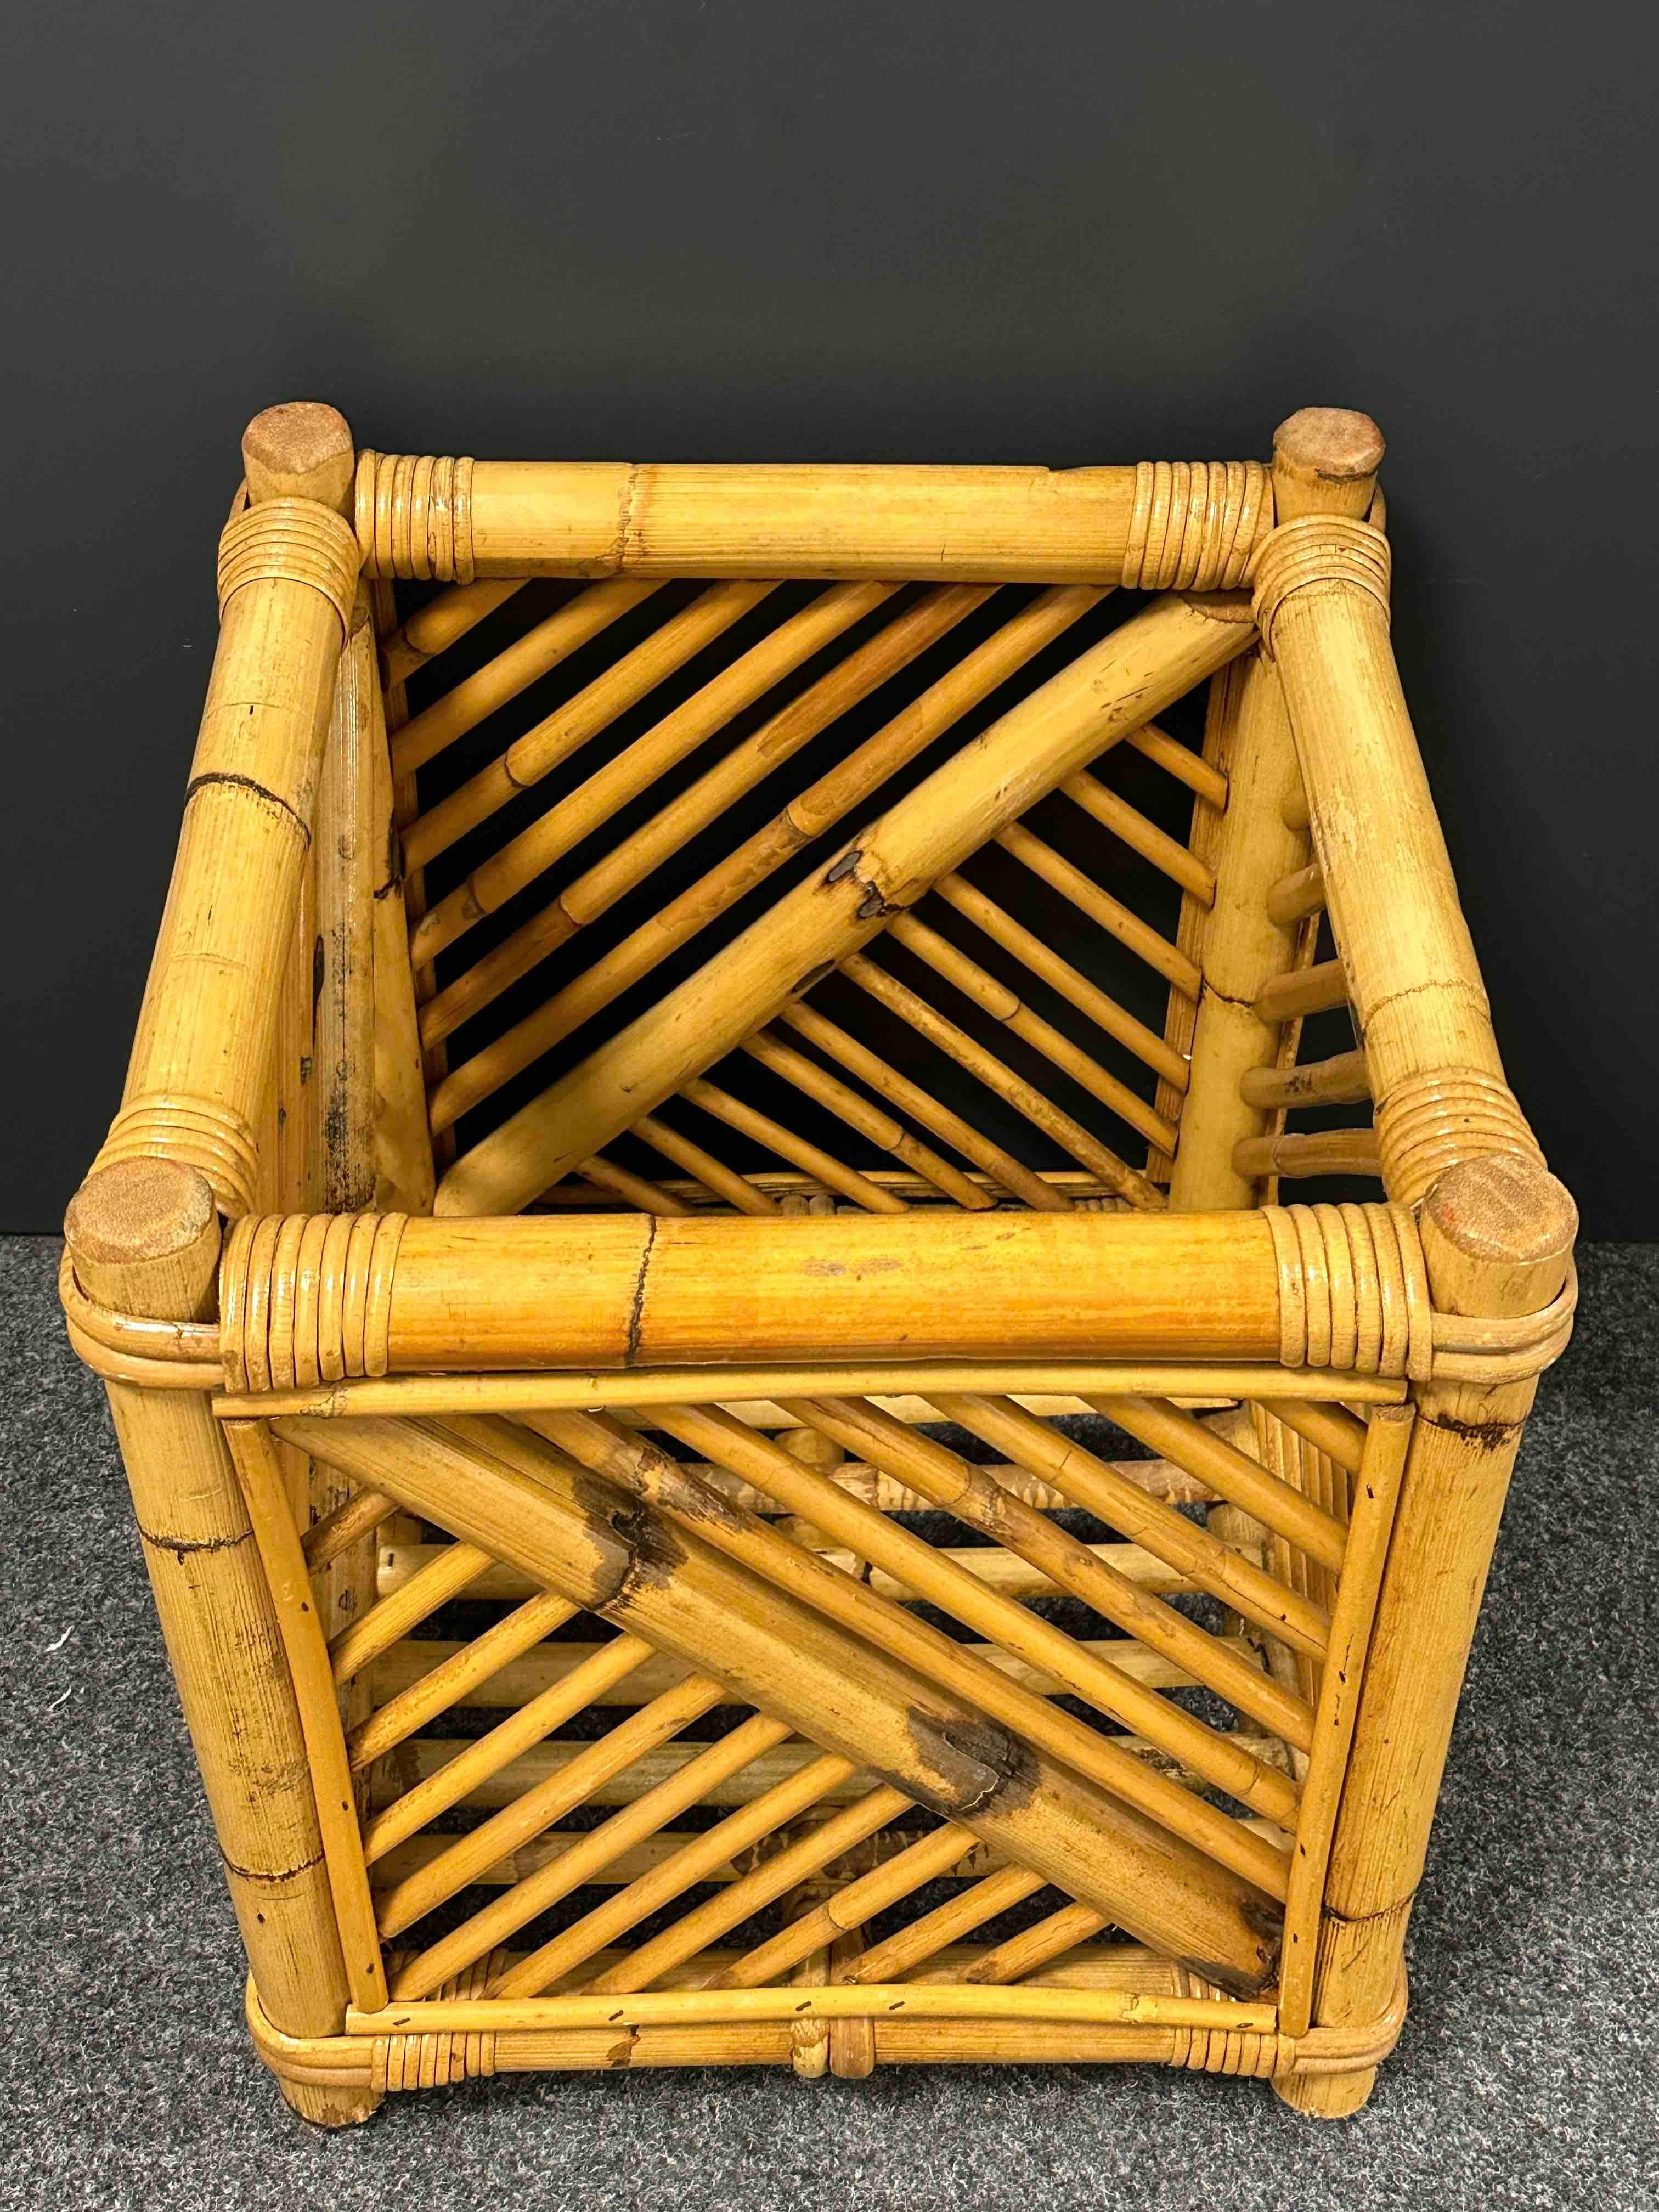 Vivai Del Sud Bamboo Wicker Vintage Pot Cache Plant Holder or Waist Basket 1970s For Sale 2